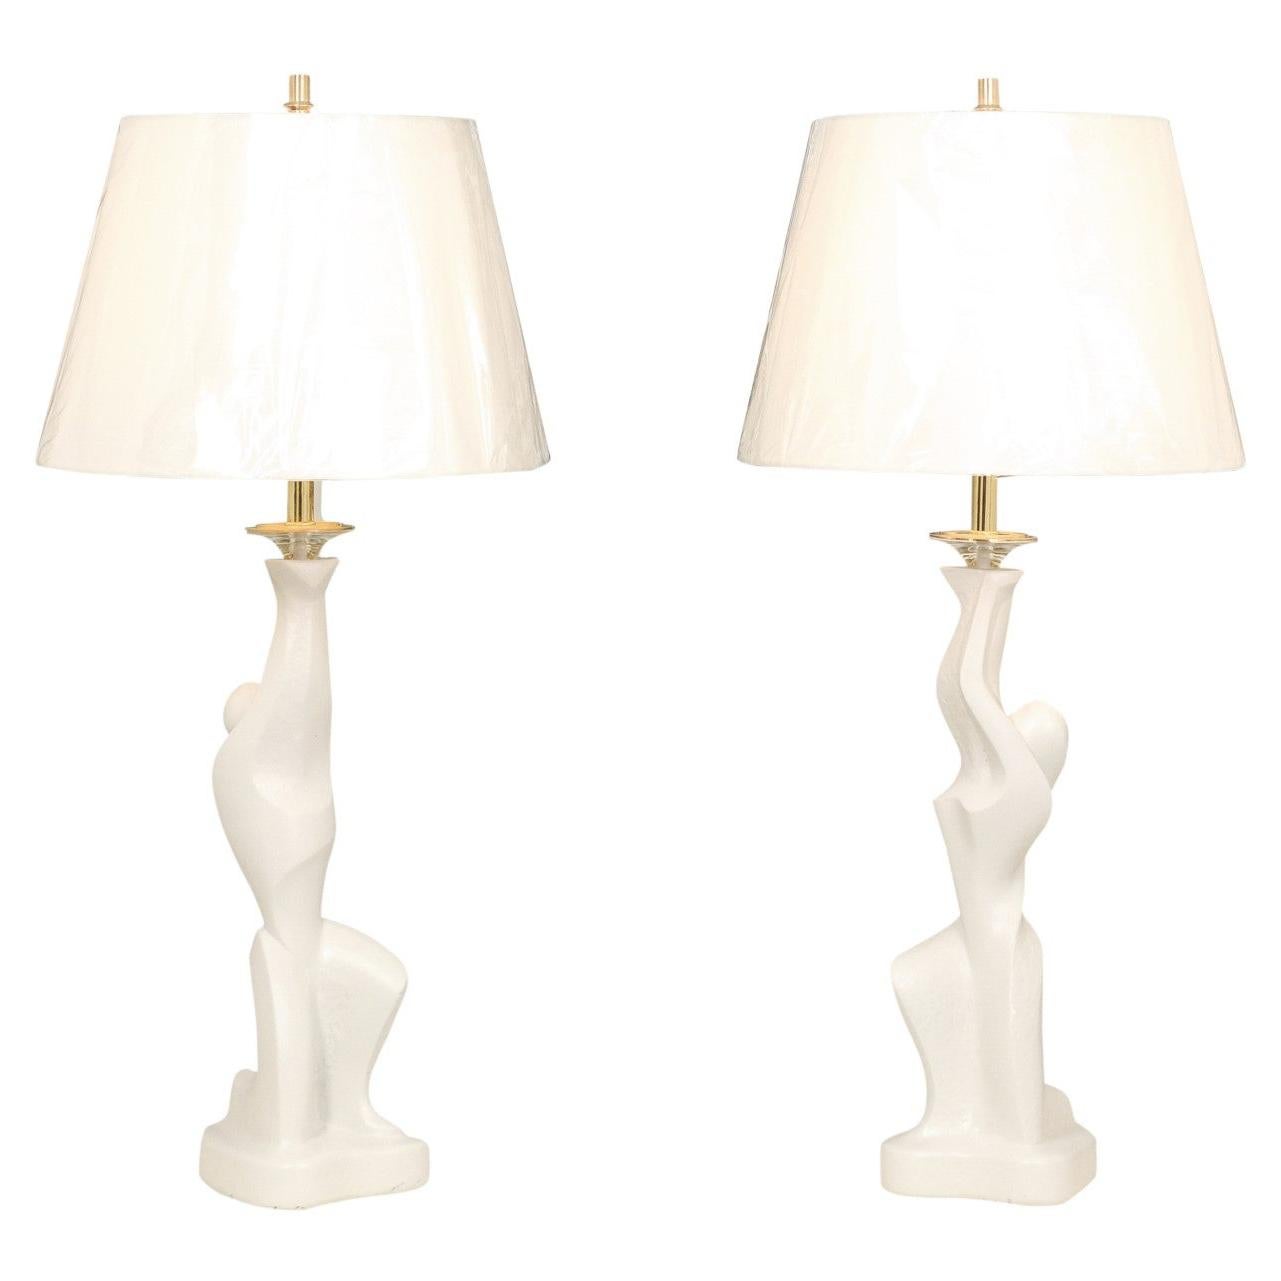 Dramatic Restored Pair of Plaster Art Deco Figures, circa 1940, as Custom Lamps